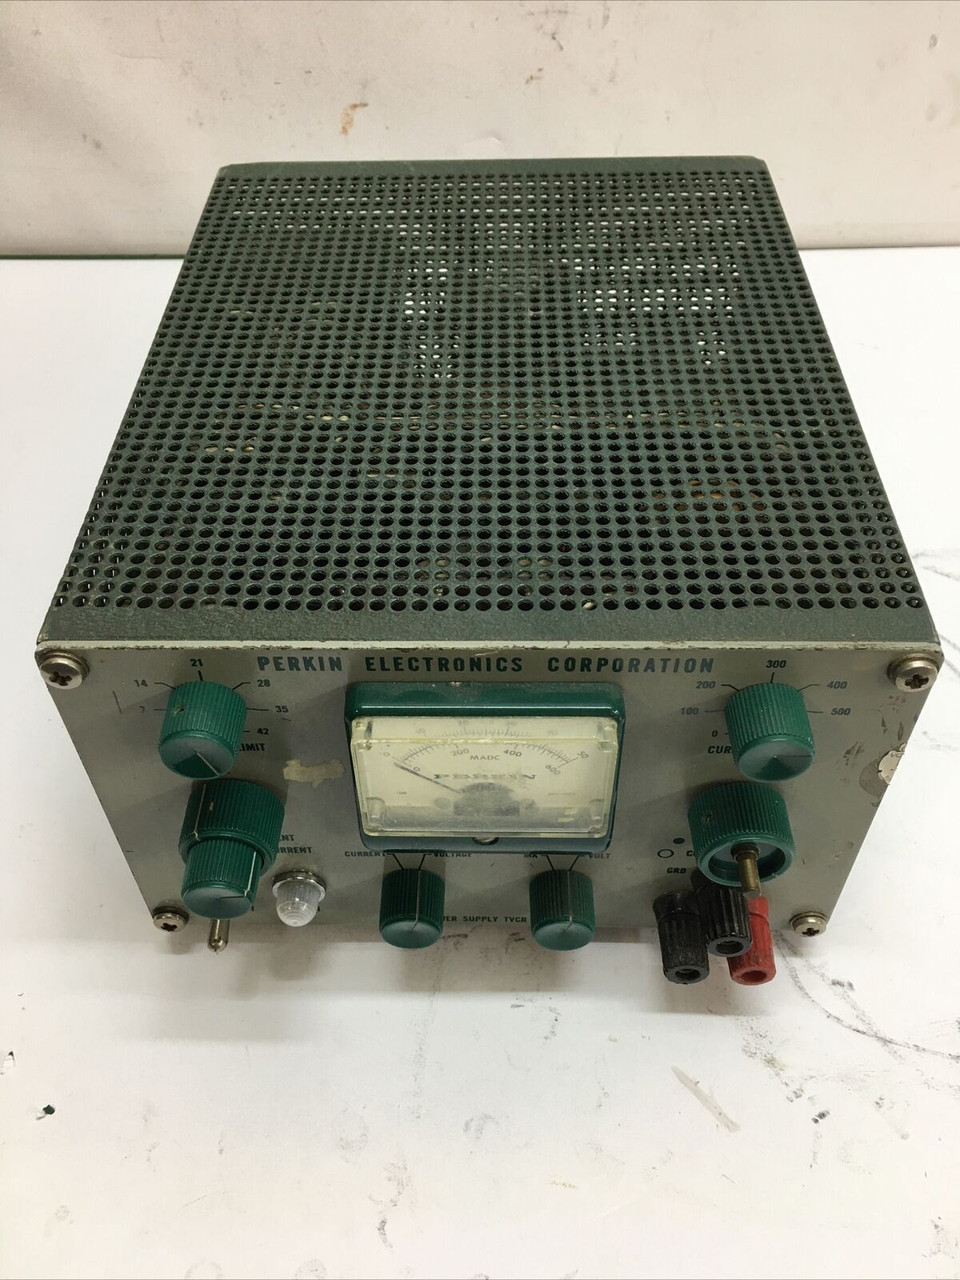 DC Power Supply TVCR 040-0 5 Perkin Electronics